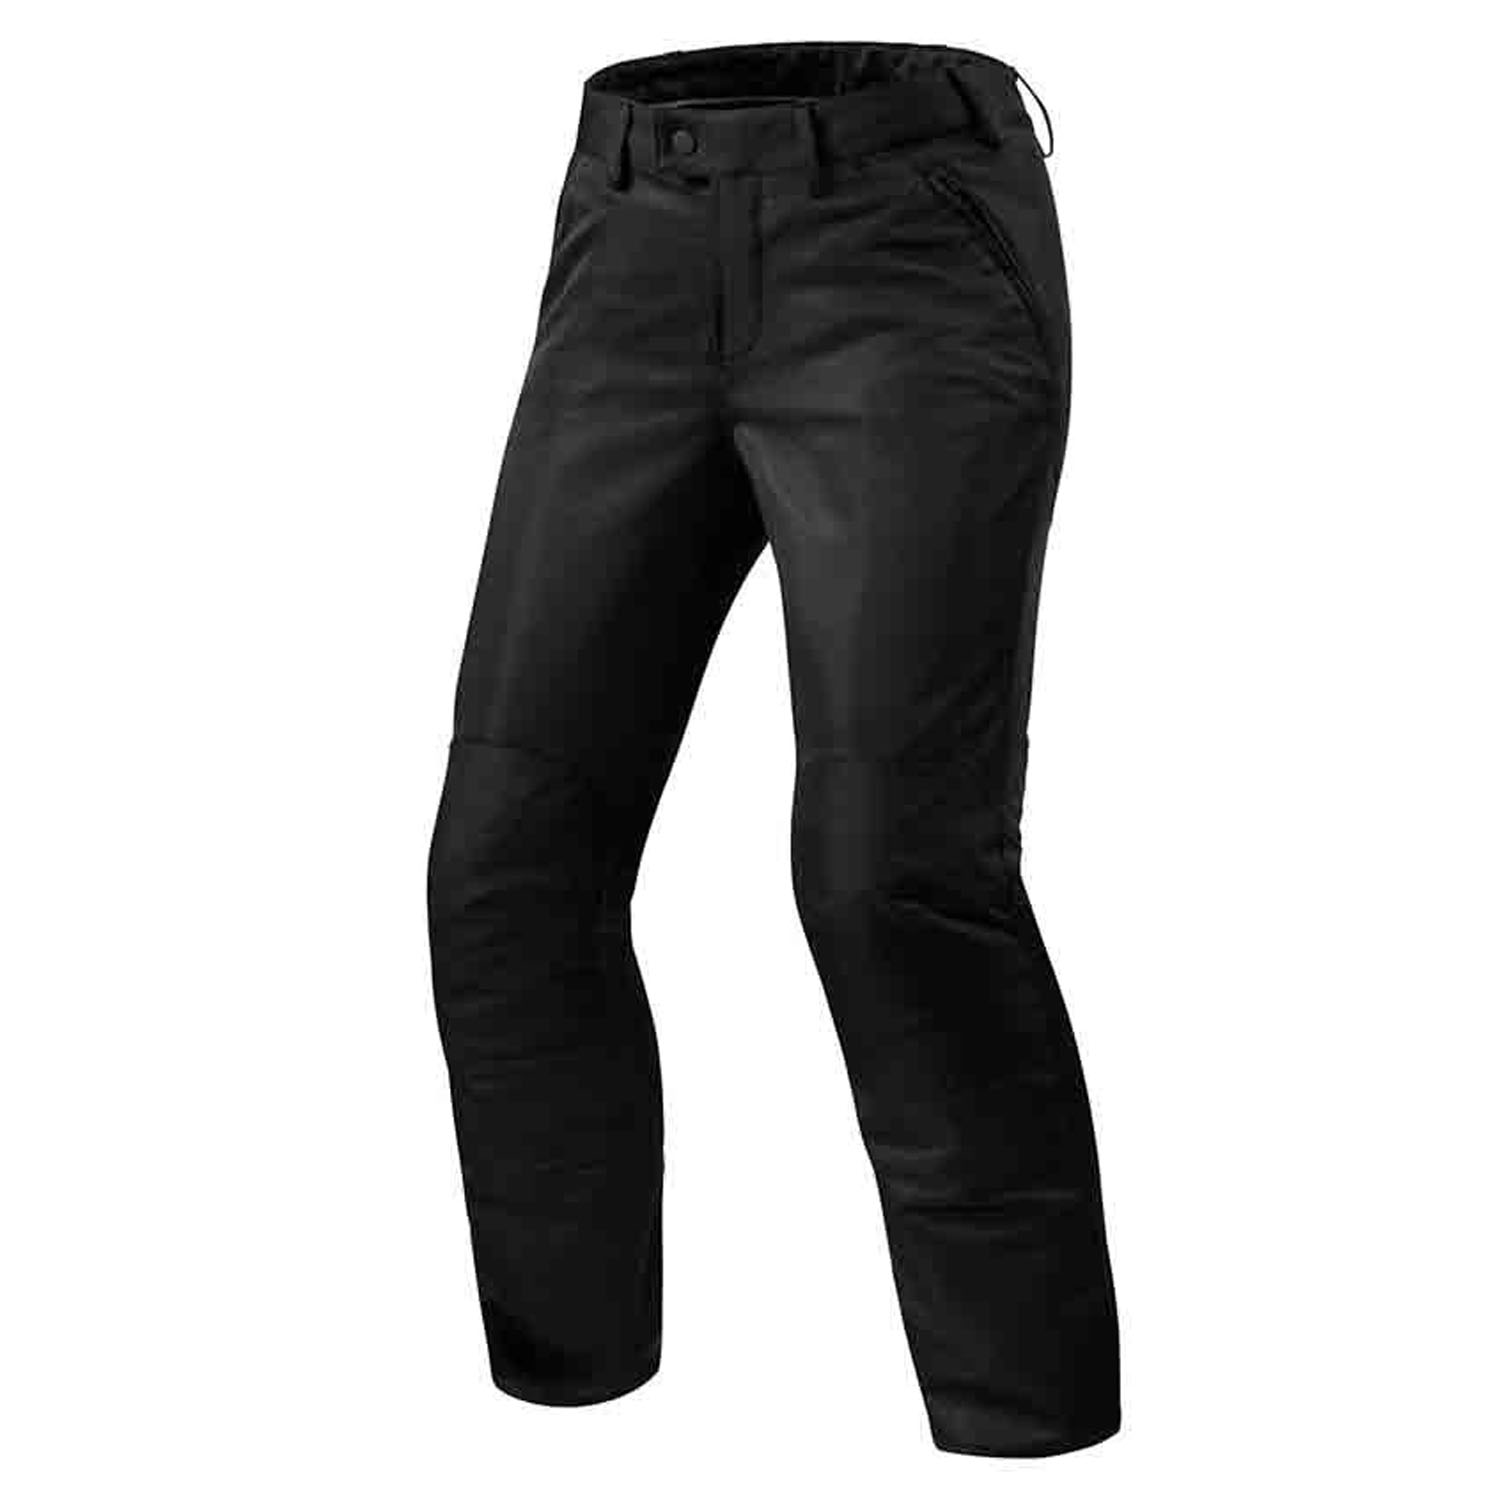 Image of REV'IT! Eclipse 2 Ladies Black Long Motorcycle Pants Size 40 EN